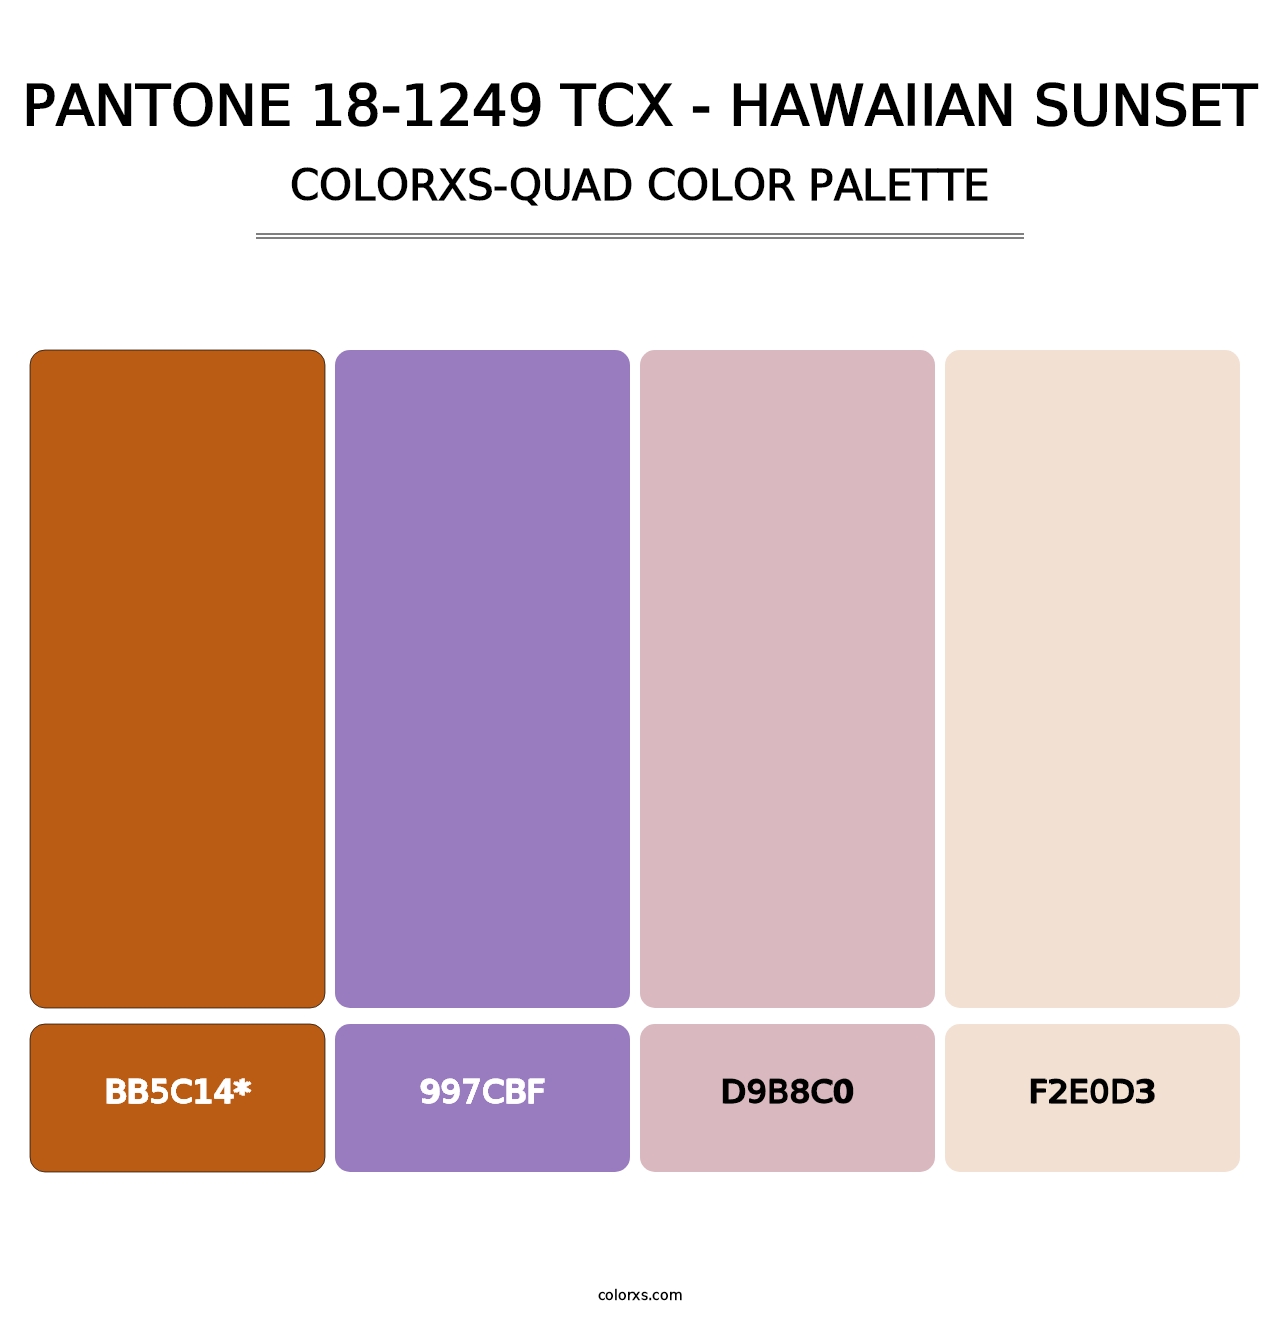 PANTONE 18-1249 TCX - Hawaiian Sunset - Colorxs Quad Palette